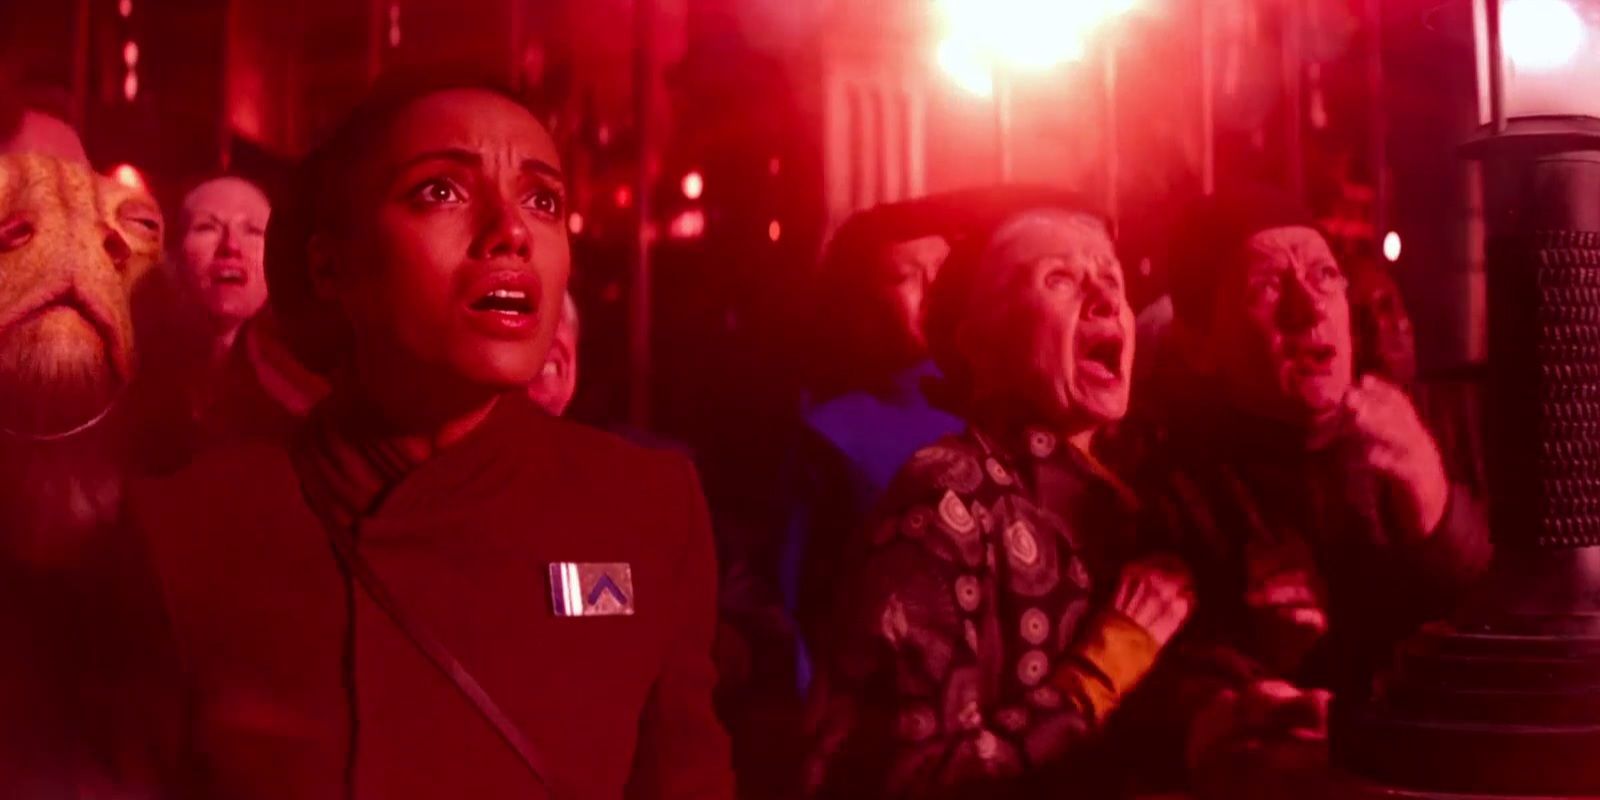 Members of the Galactic Senate prepare for destruction in Star Wars The Force Awakens